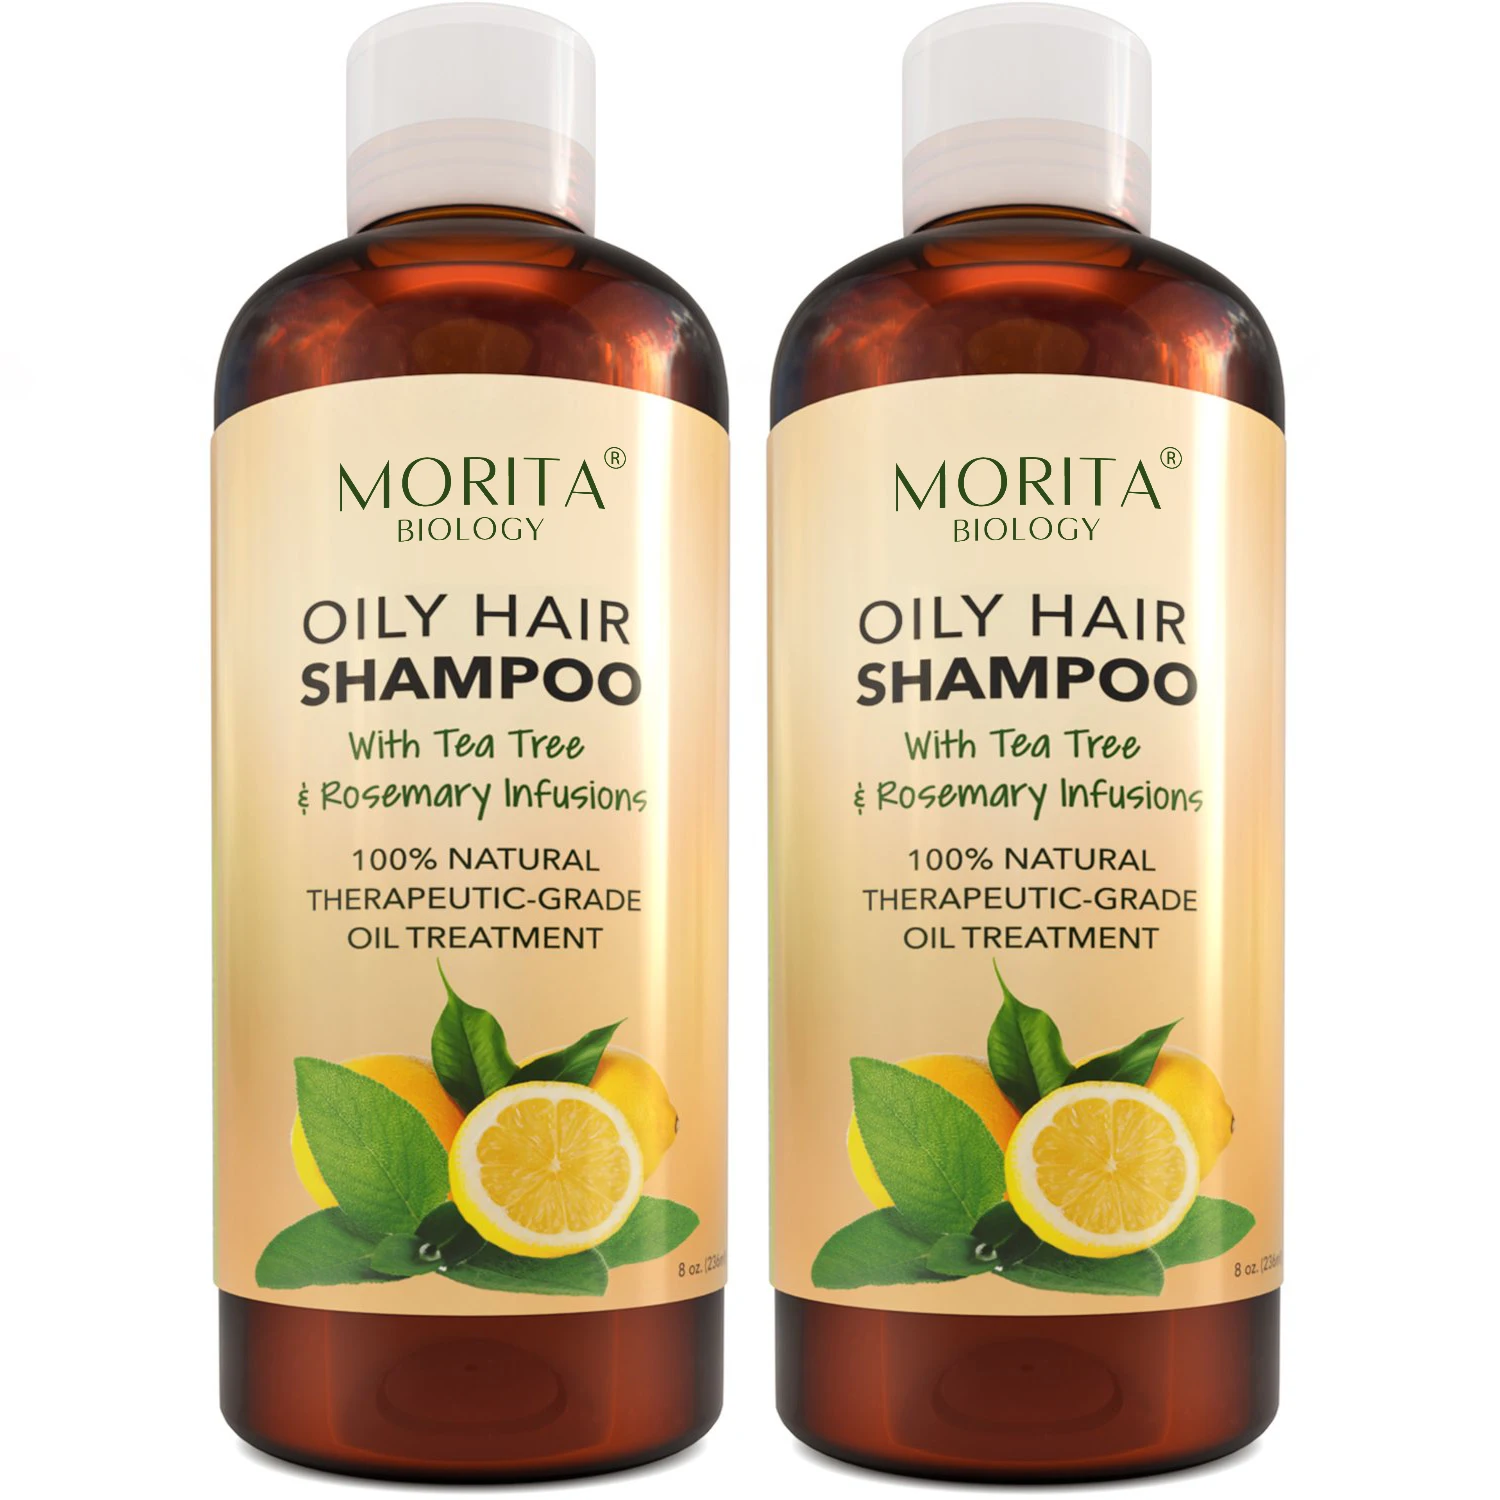 

Hot-Sale Product Natural Tea Tree Rosemary Infusions Oily Hair Shampoo Korean Black Hair Shampoo and Conditioner for Hair Loss